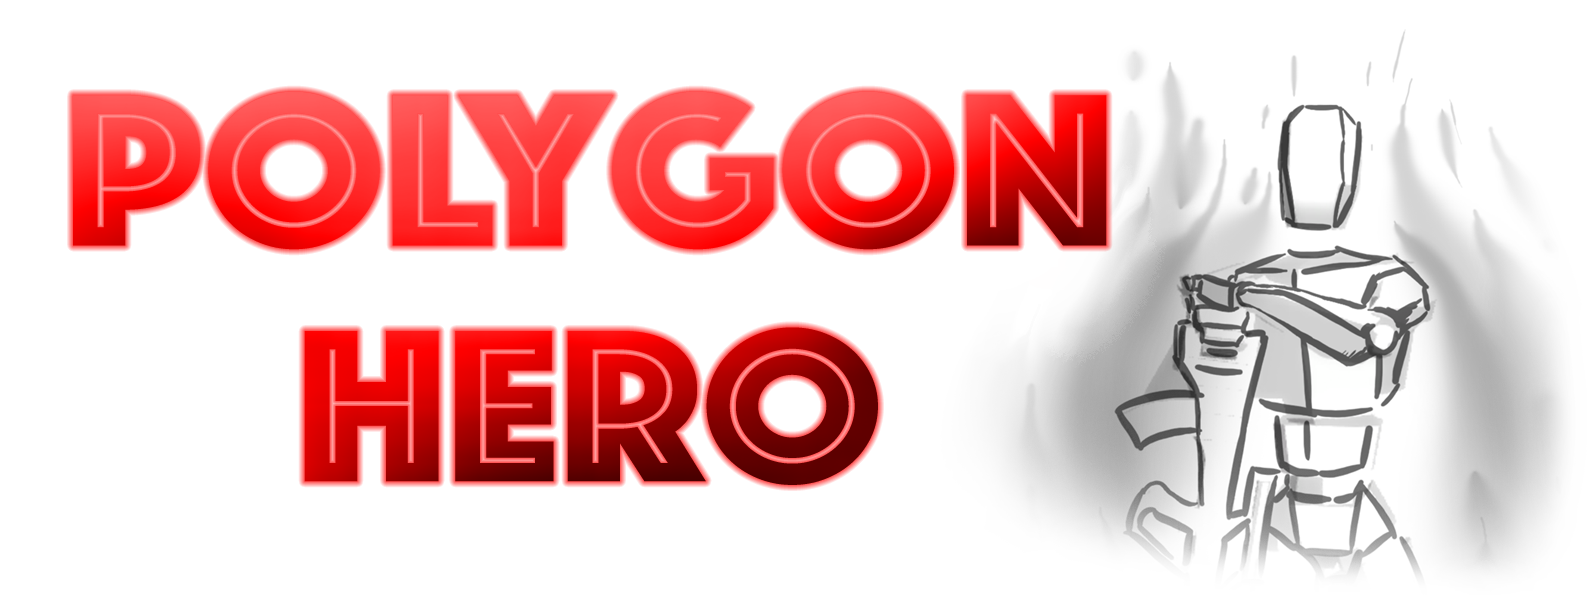 Polygon Hero